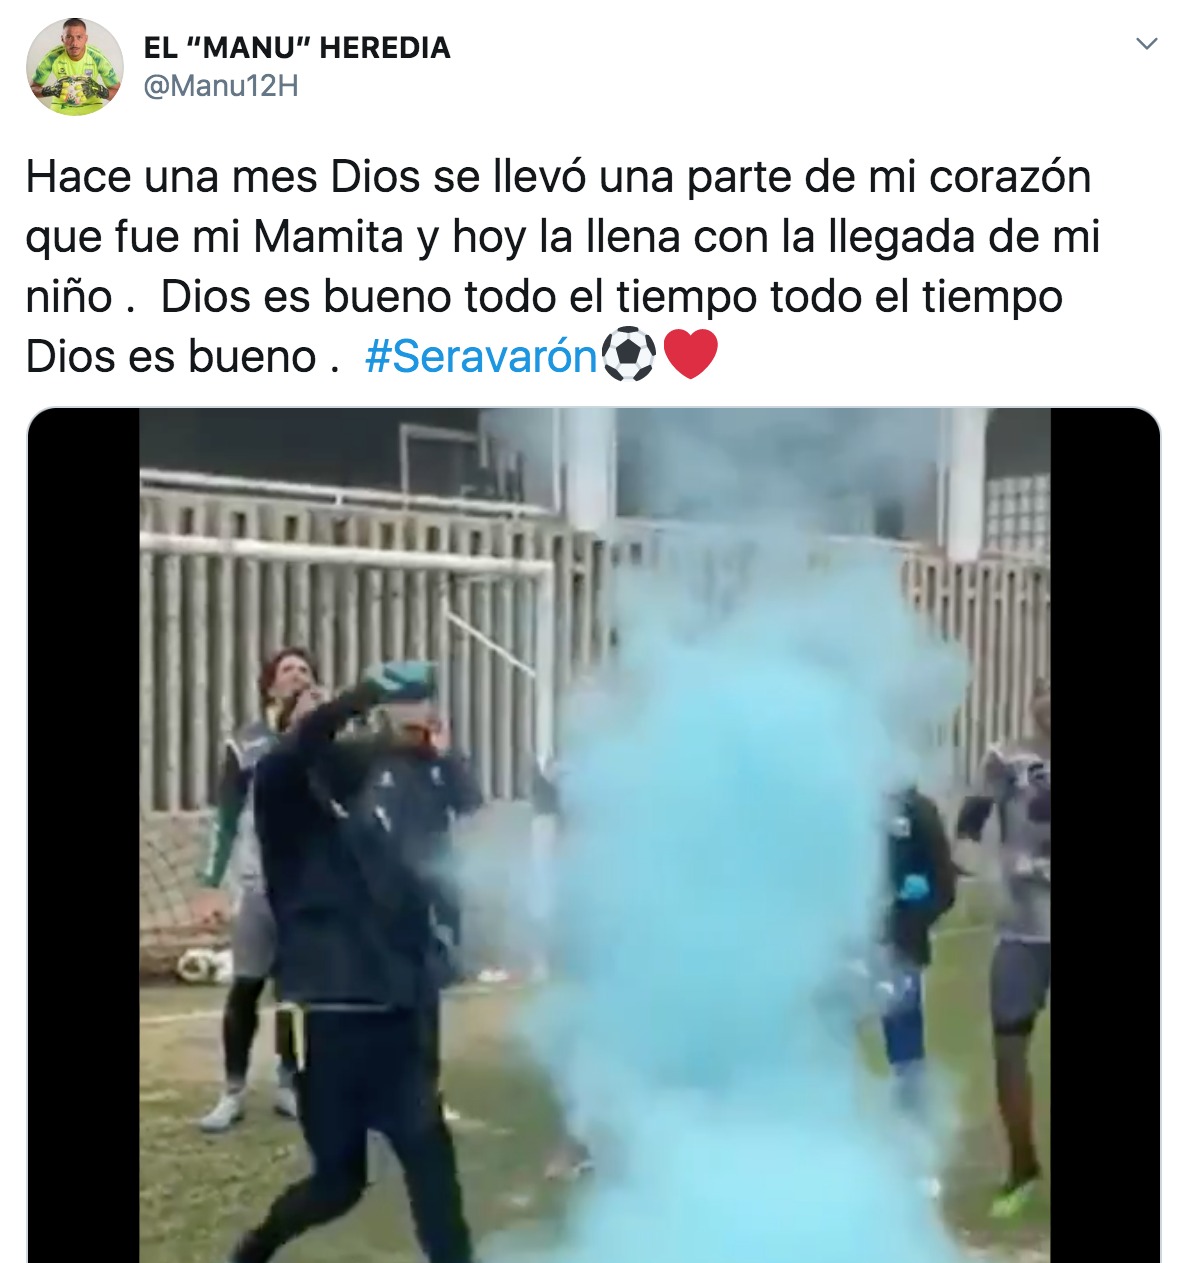 El mensaje de Manuel Heredia en Twitter.